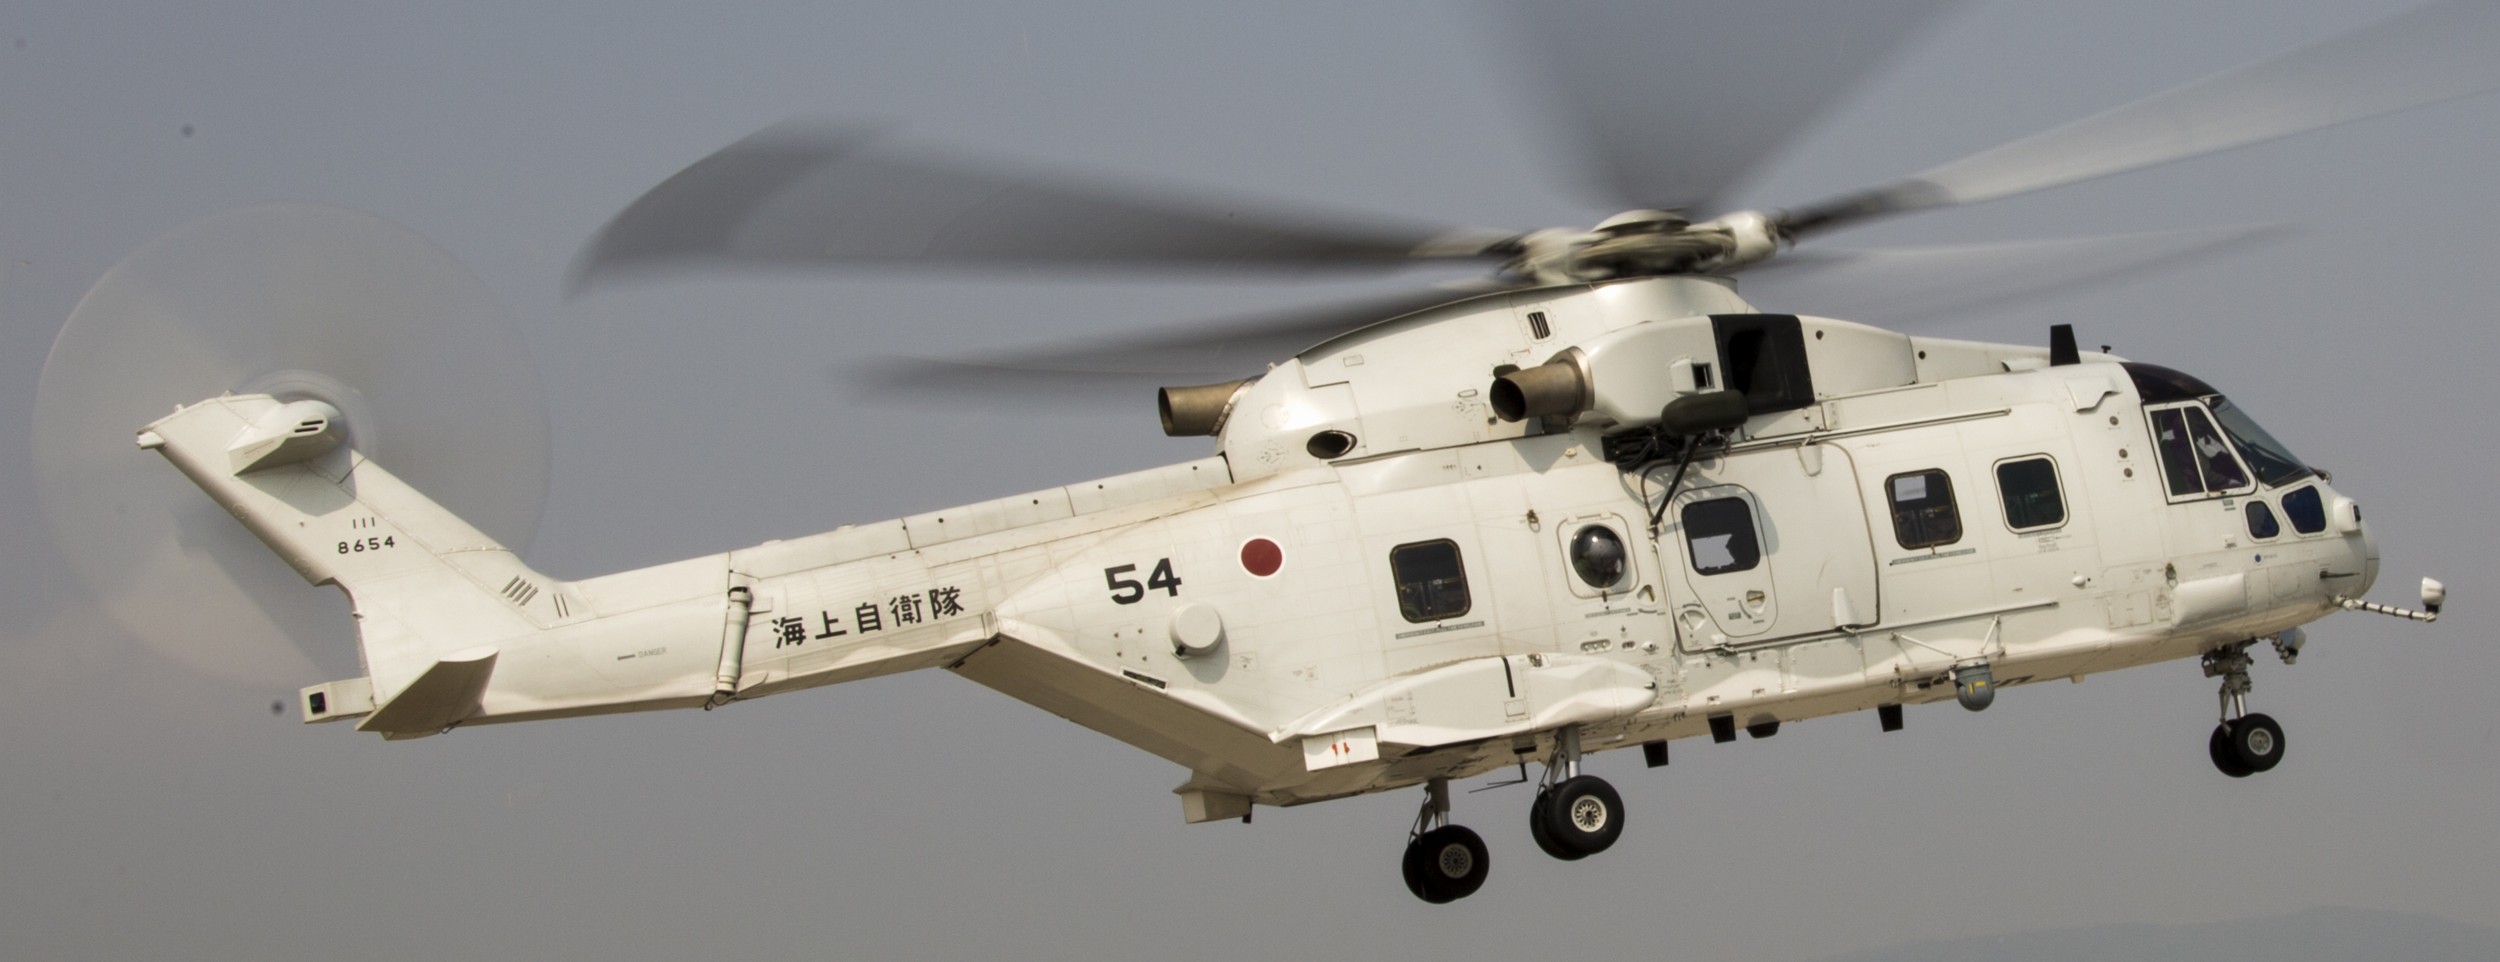 kawasaki mch-101 helicopter airborne mine countermeasures amcm japan maritime self defense force jmsdf merlin 8654 02